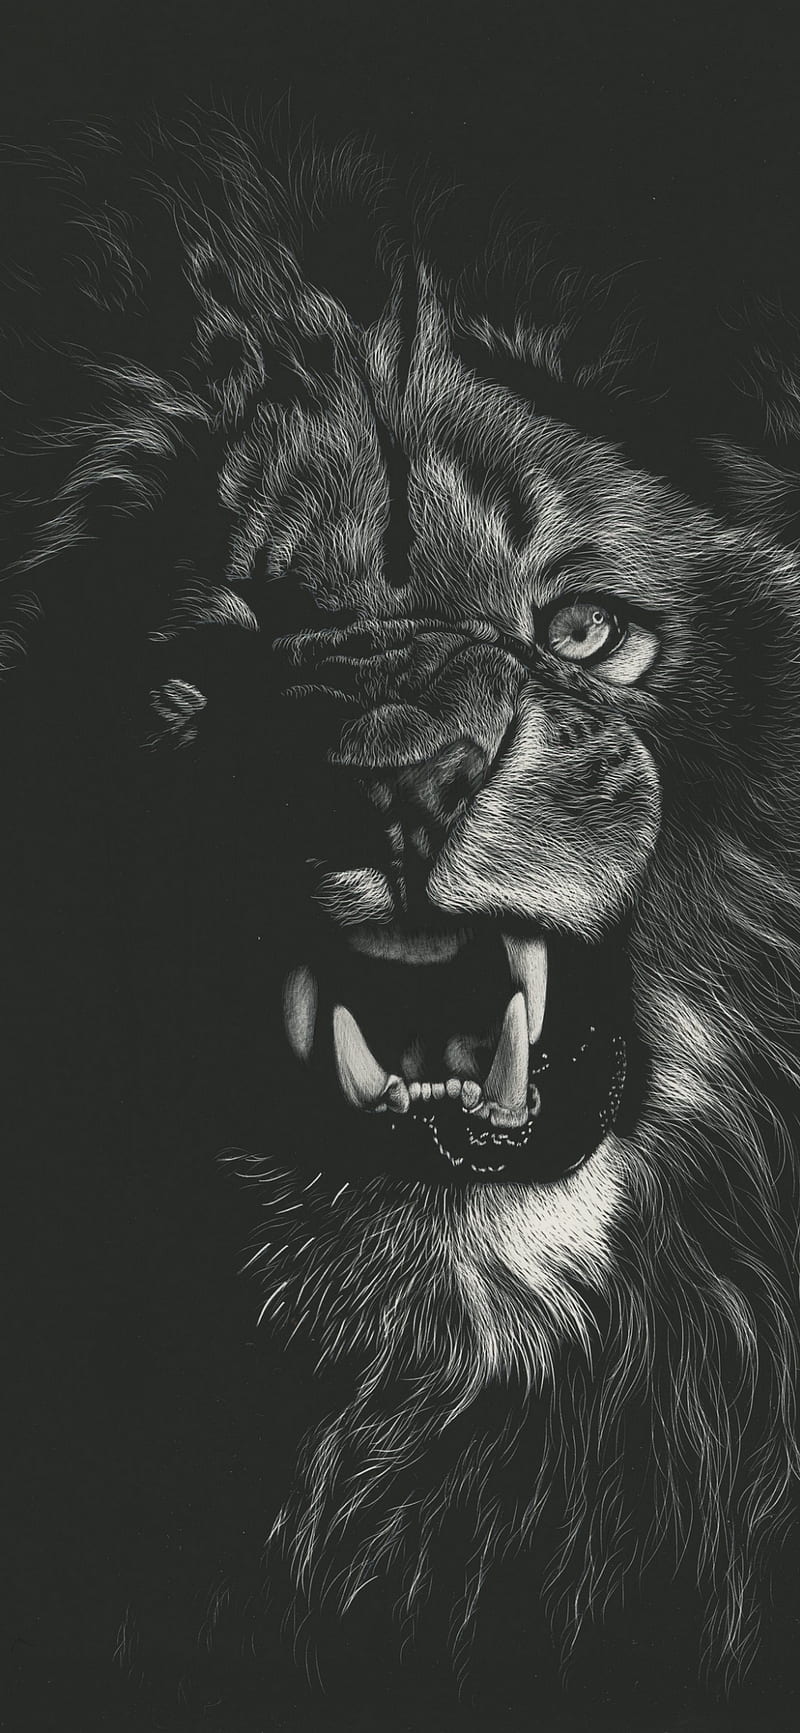 Roaring Lion Wallpaper (67+ images)